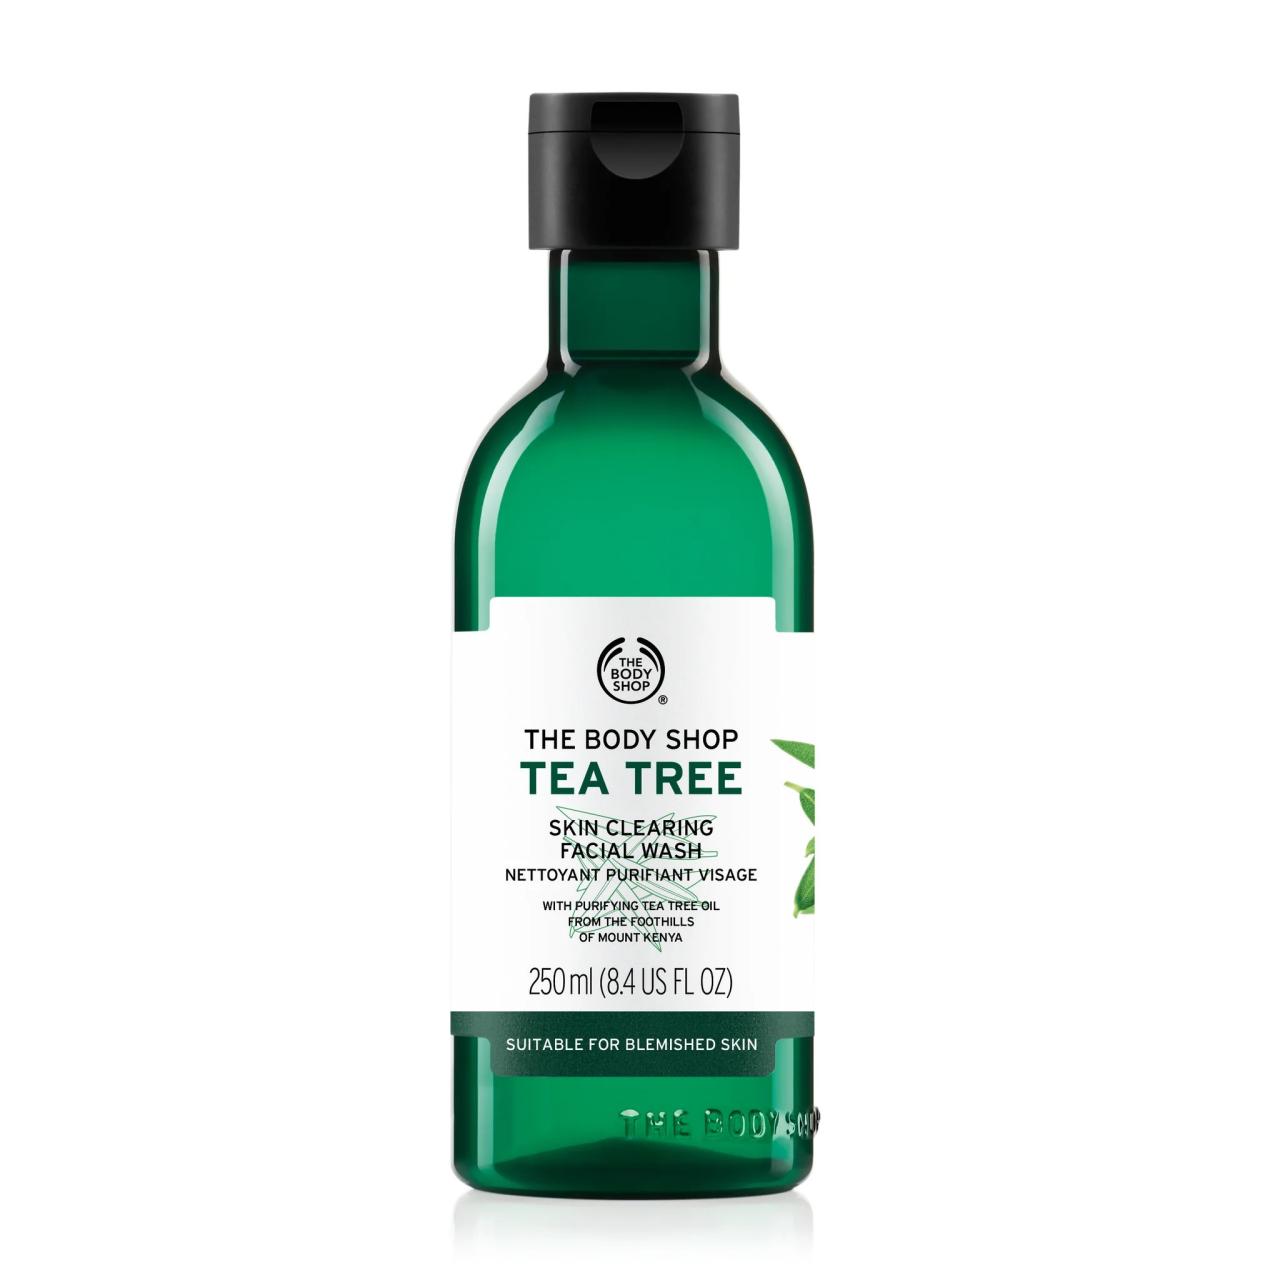 Cek Ingredients Ella Skincare Tea Tree Facial Cleanser